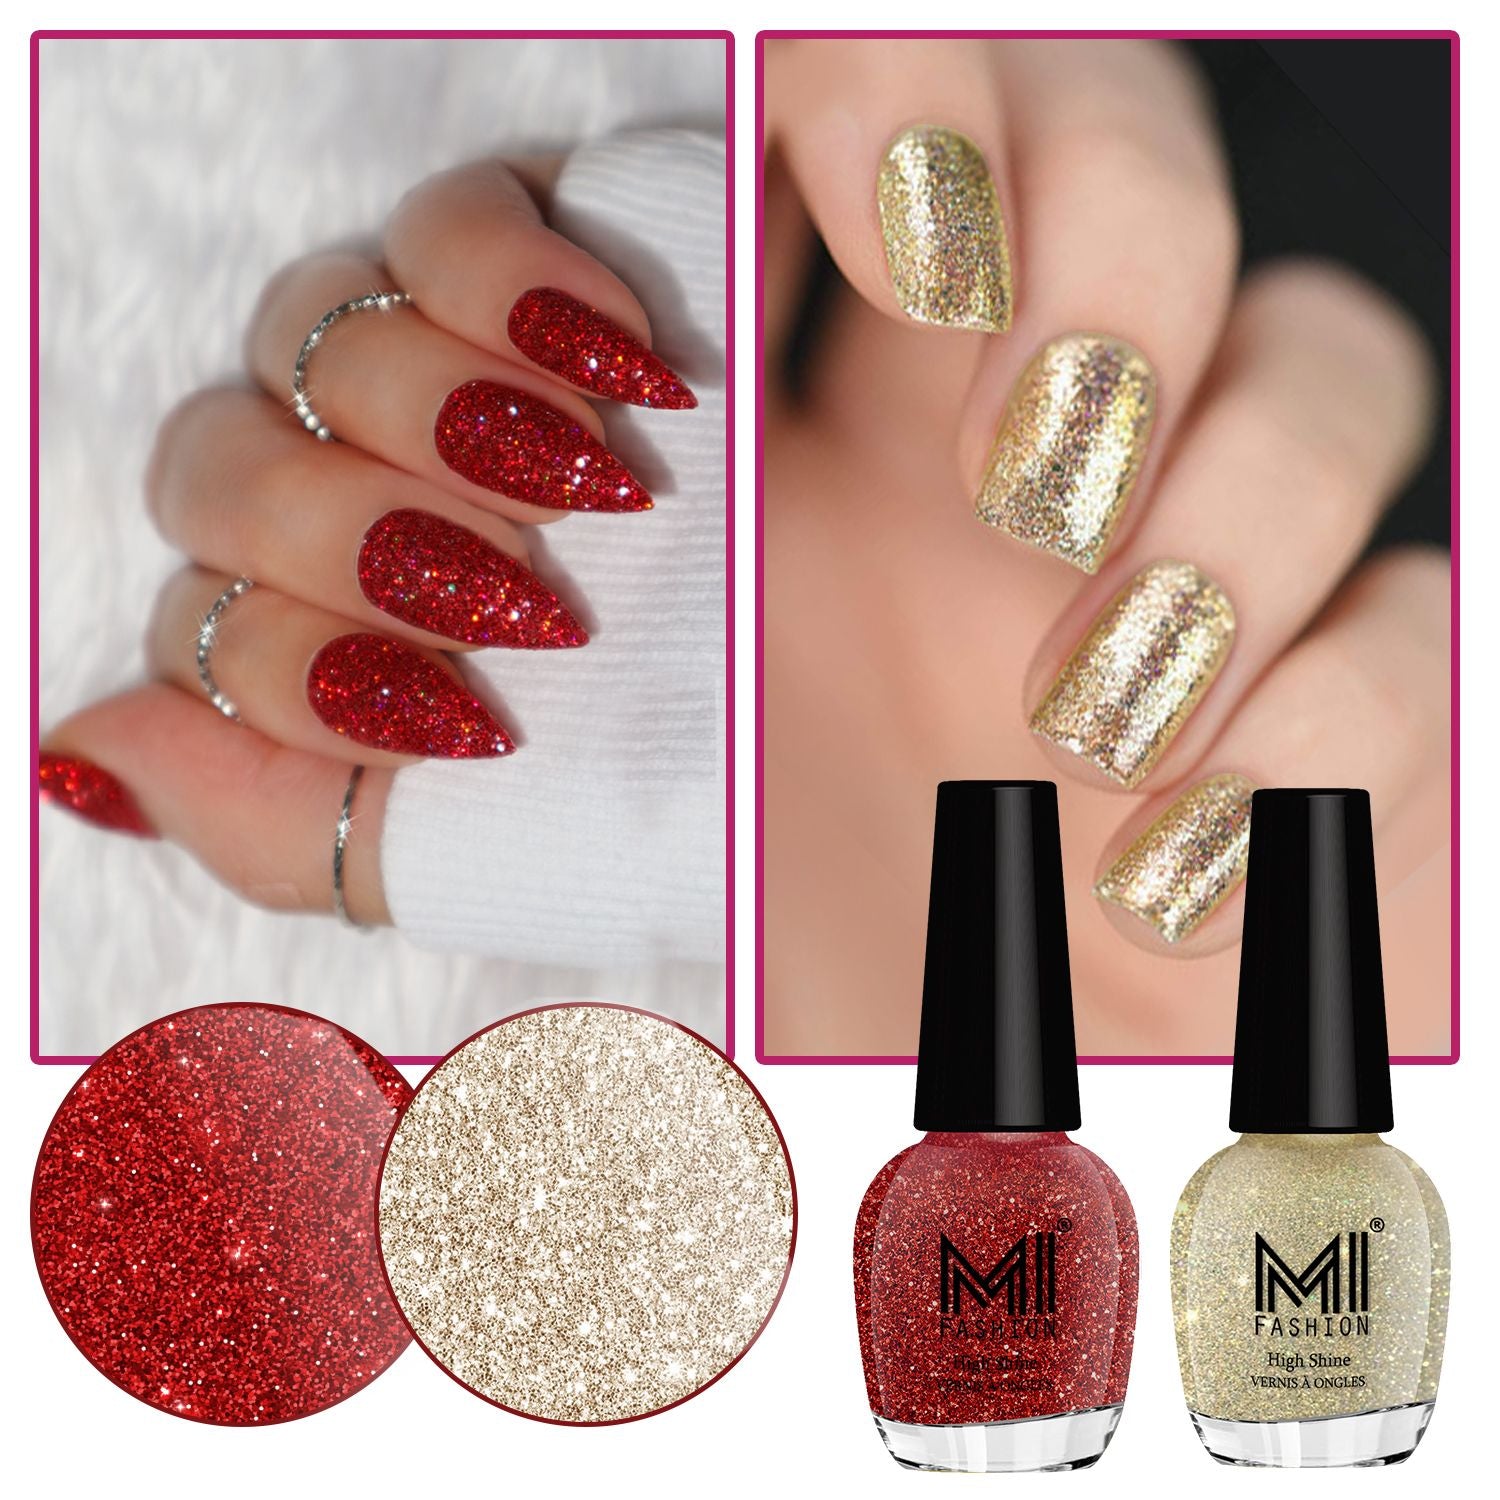 Gold Glitter Nail Polish - Sally Hansen Complete Salon Manicure in Golden  Rule | Organic nail polish, Gold glitter nail polish, Organic nails